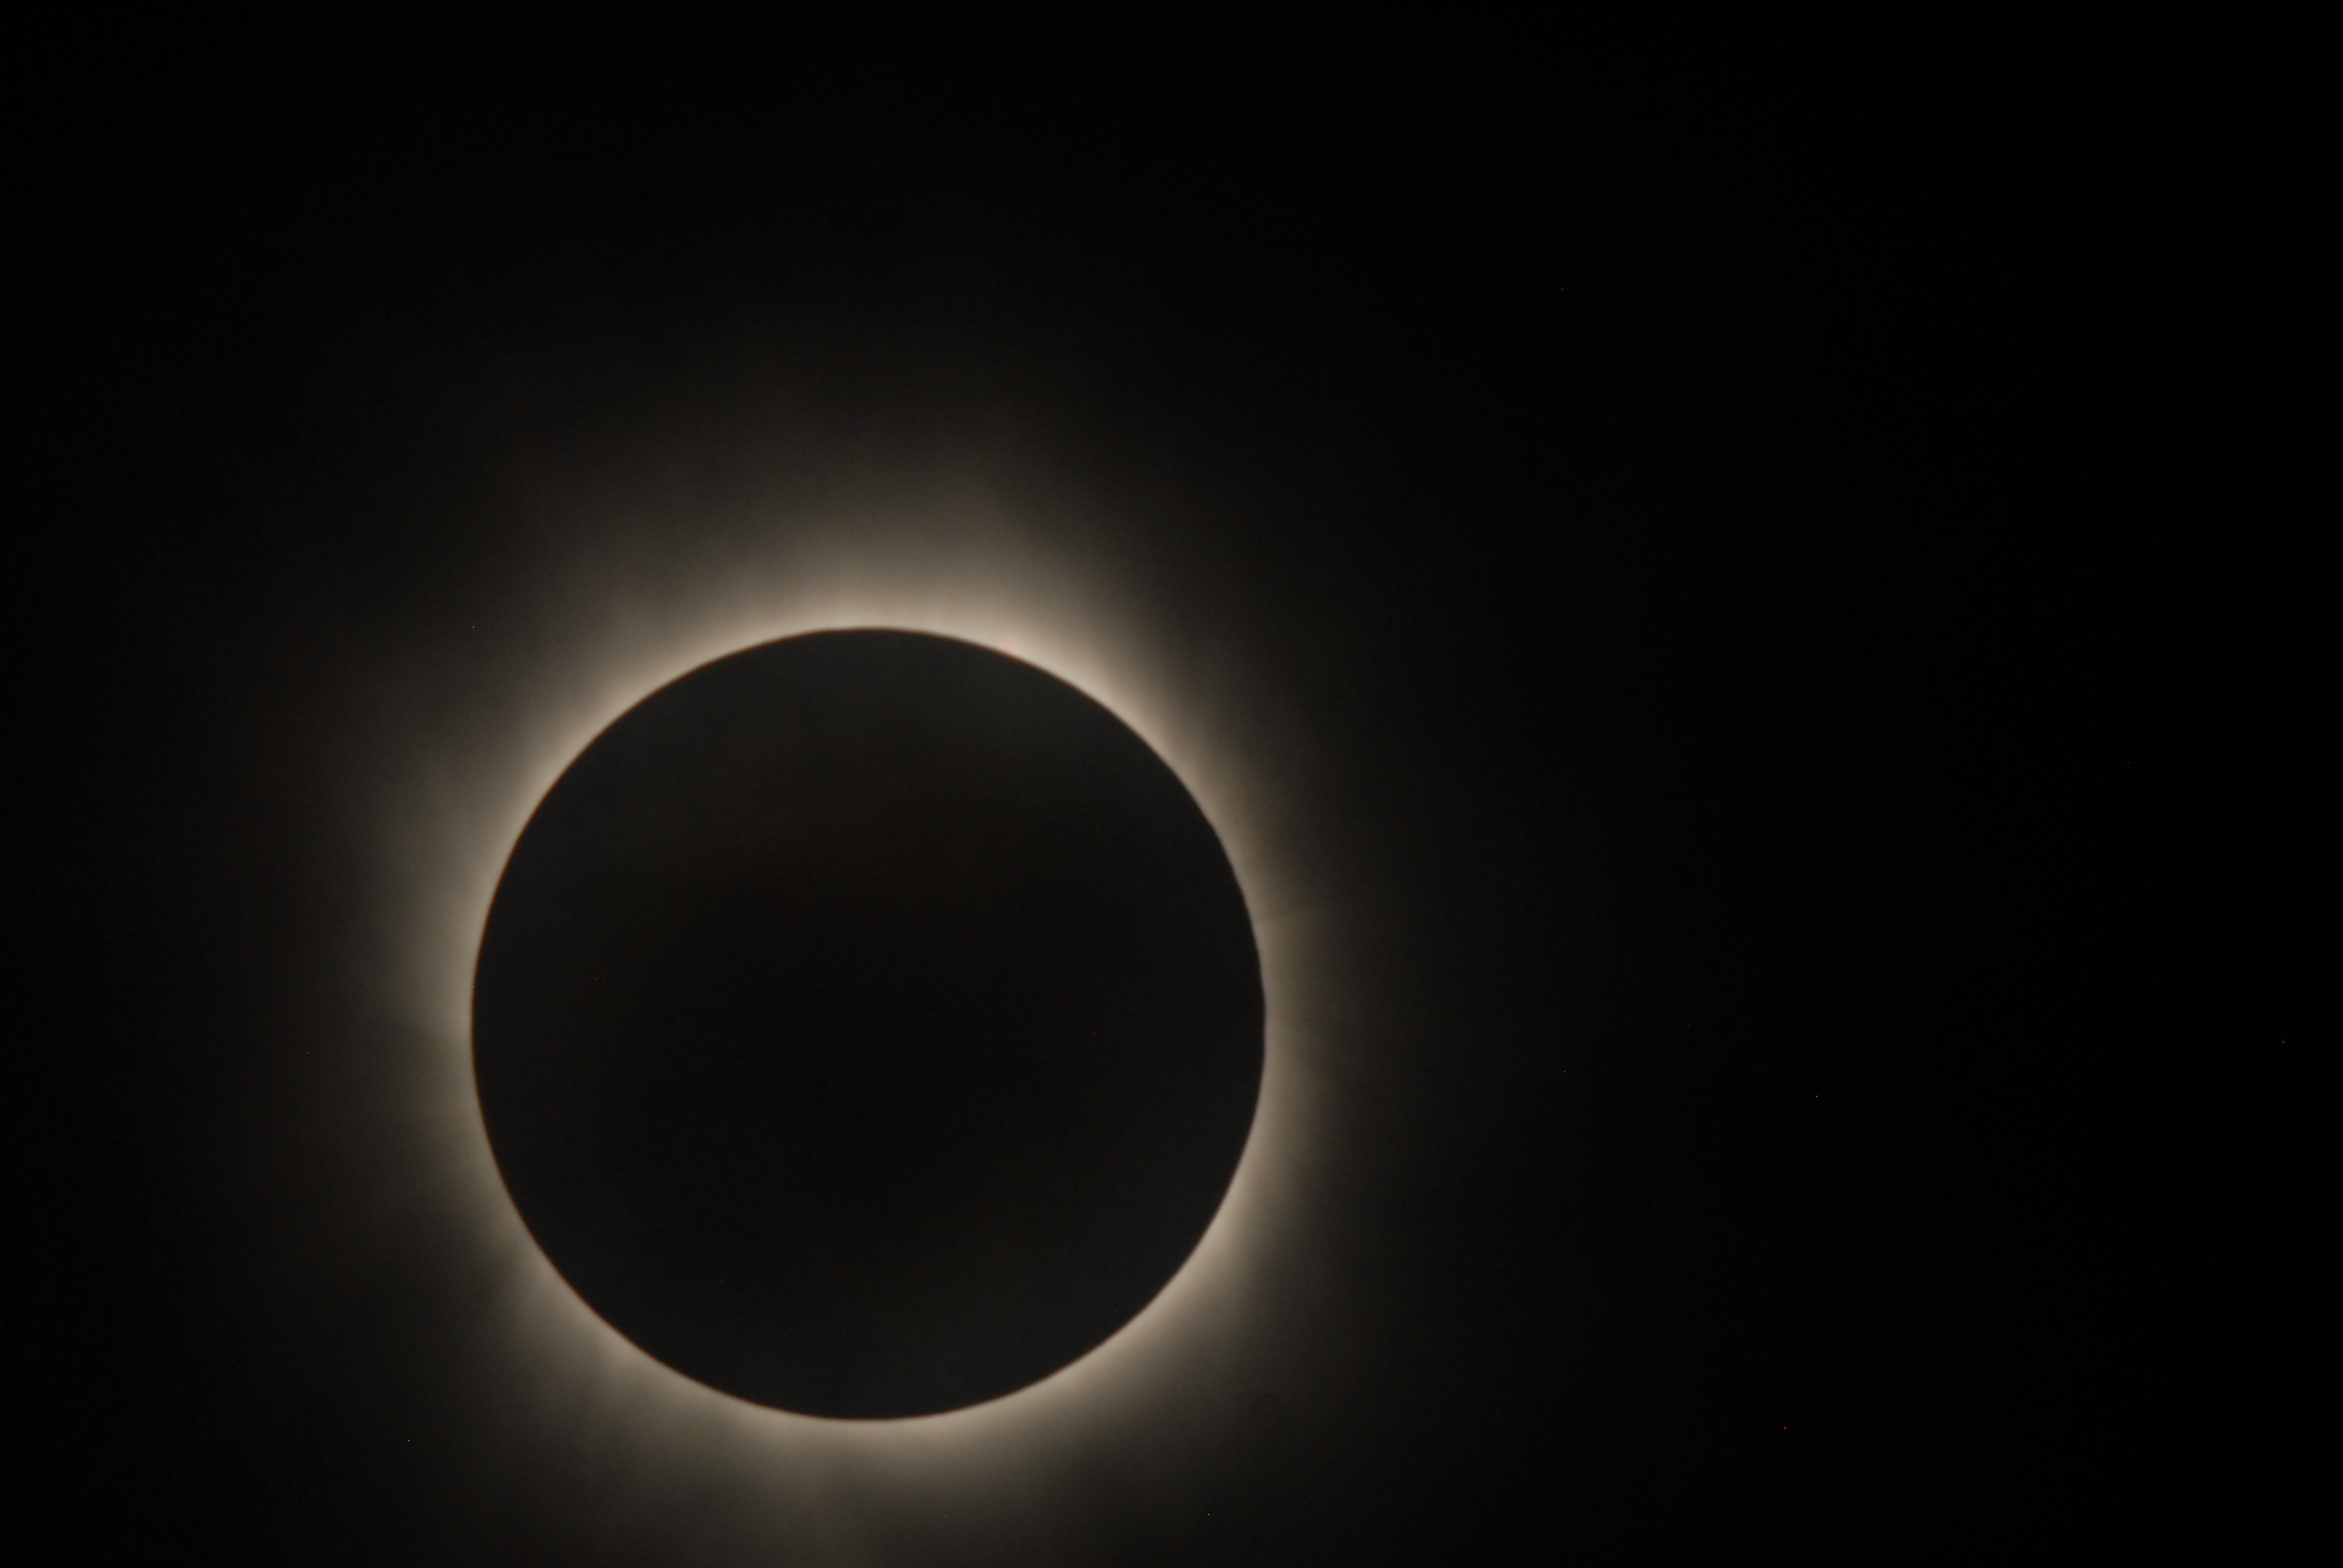 Último eclipse solar foi em novembro de 2013 (Foto: NASA/JAXA)